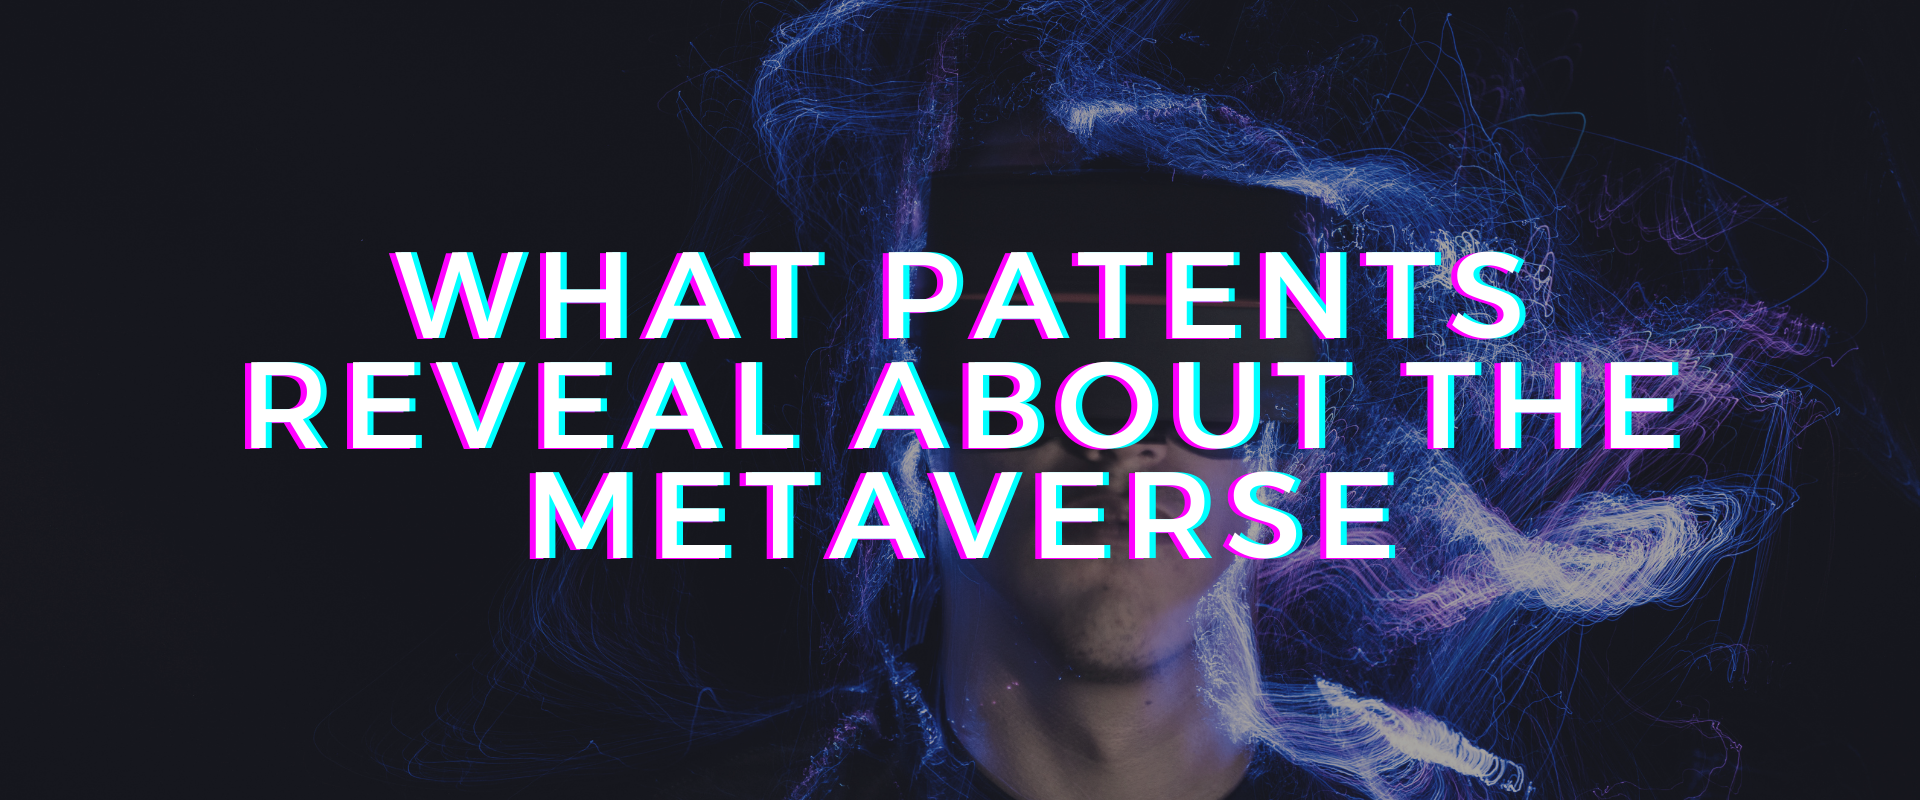 Facebook Metaverse Patents